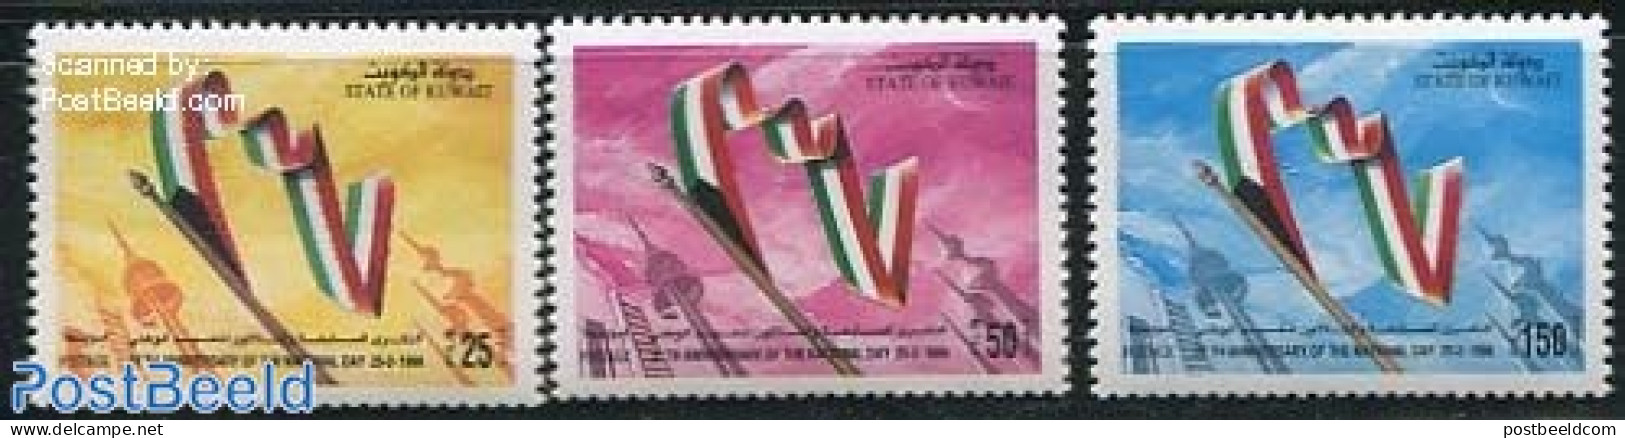 Kuwait 1998 National Day 3v, Mint NH - Koweït